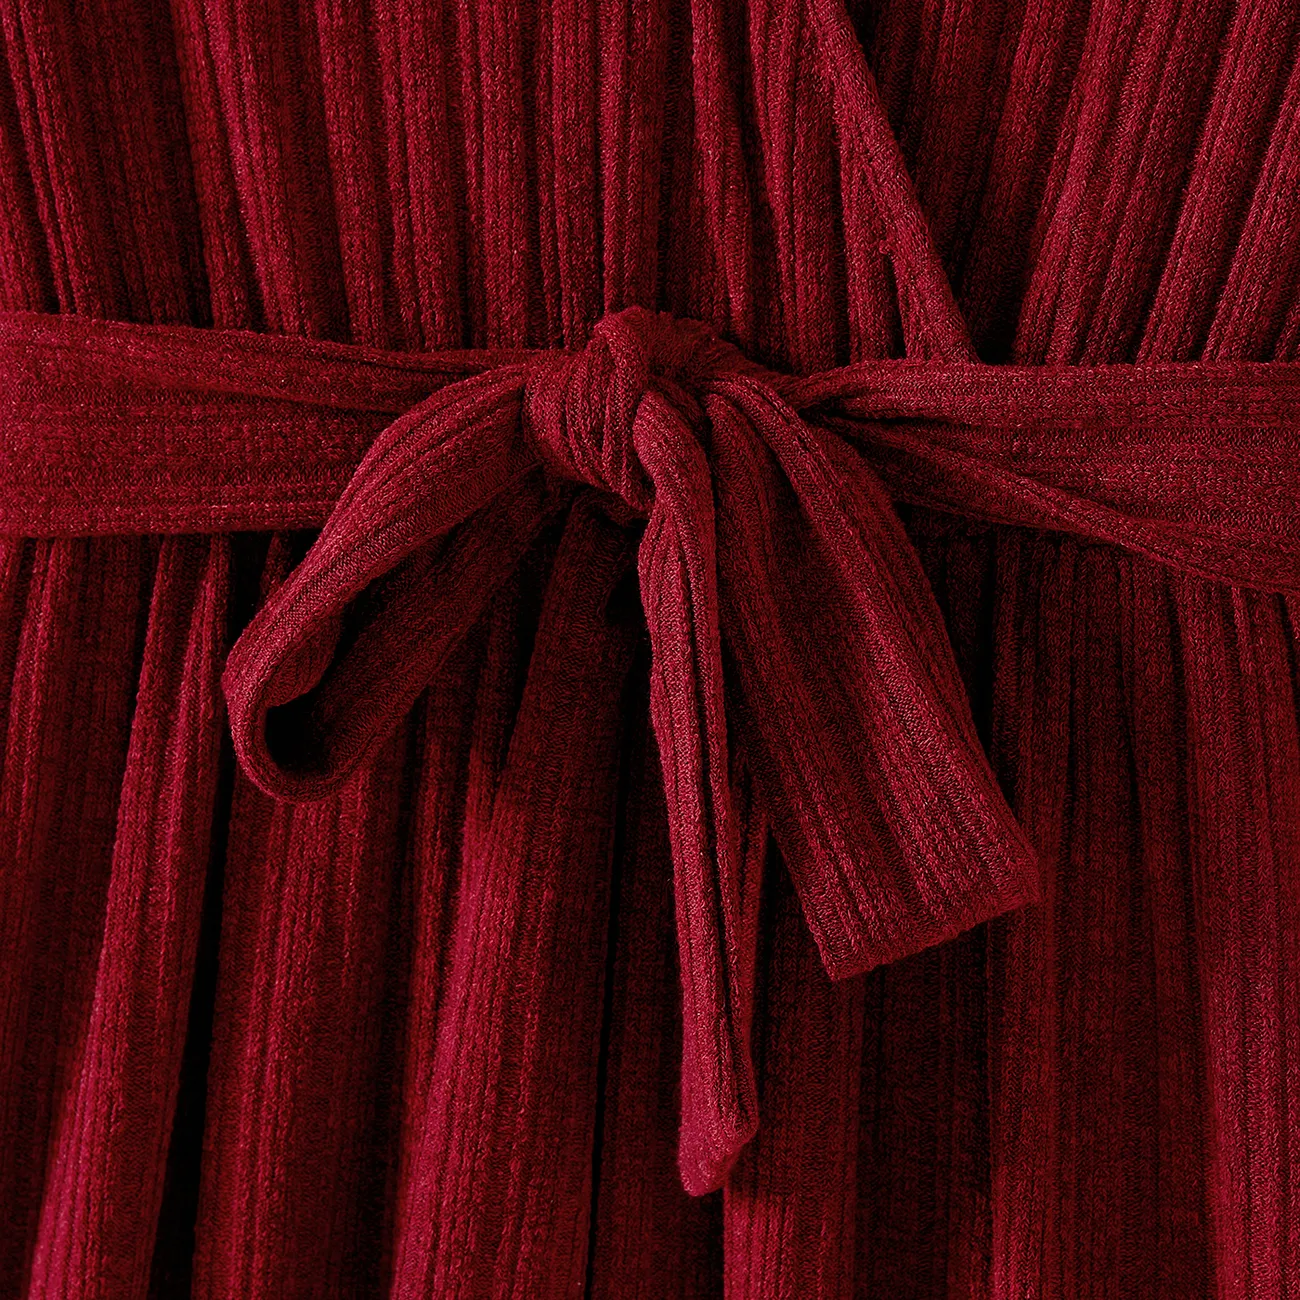 Valentine's Day Family Matching Color-block Tops and Flutter Mesh Dresses Sets Burgundy big image 1